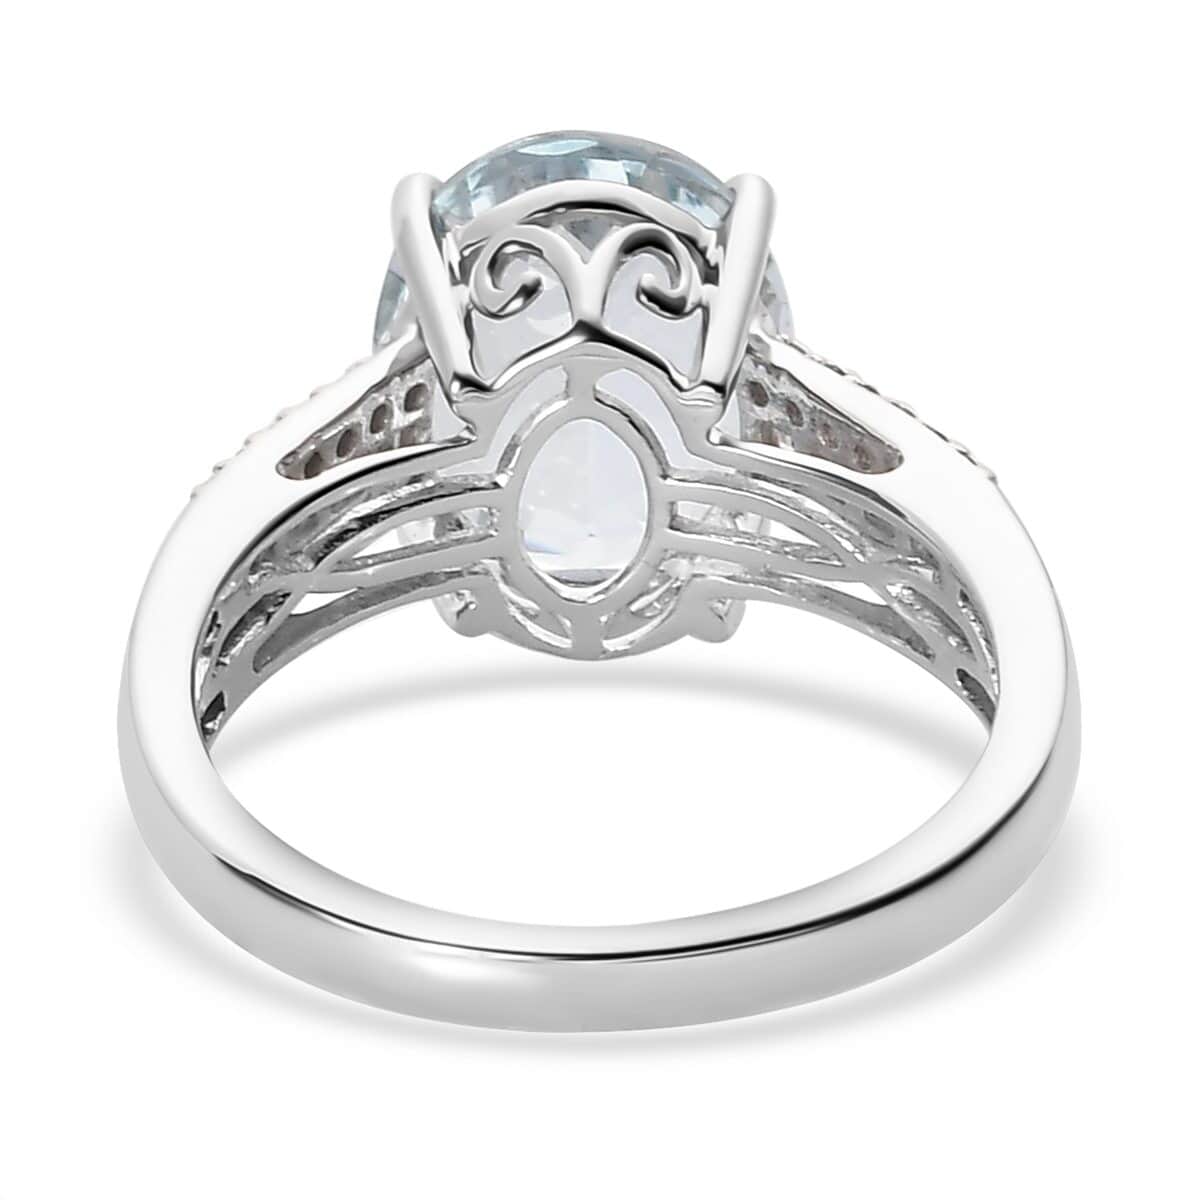 LUXORO 10K White Gold Premium Espirito Santo Aquamarine and Diamond Ring (Size 10.0) 3 Grams 3.40 ctw image number 4